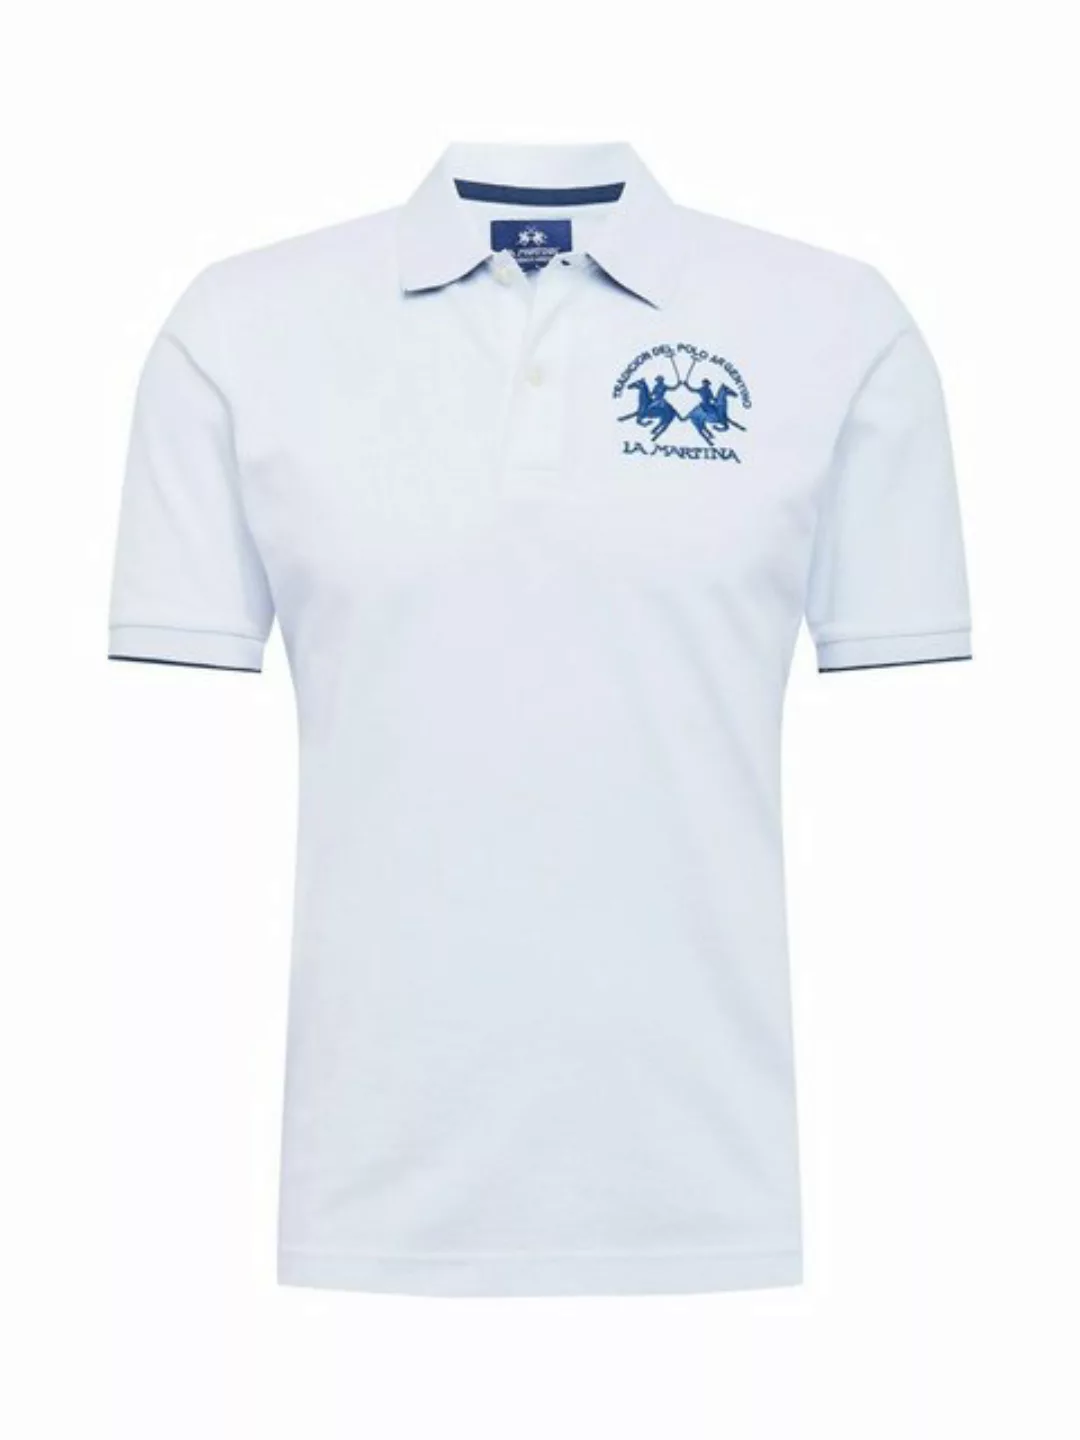 LA MARTINA Polo-Shirt CCMP01/PK001/00001 günstig online kaufen